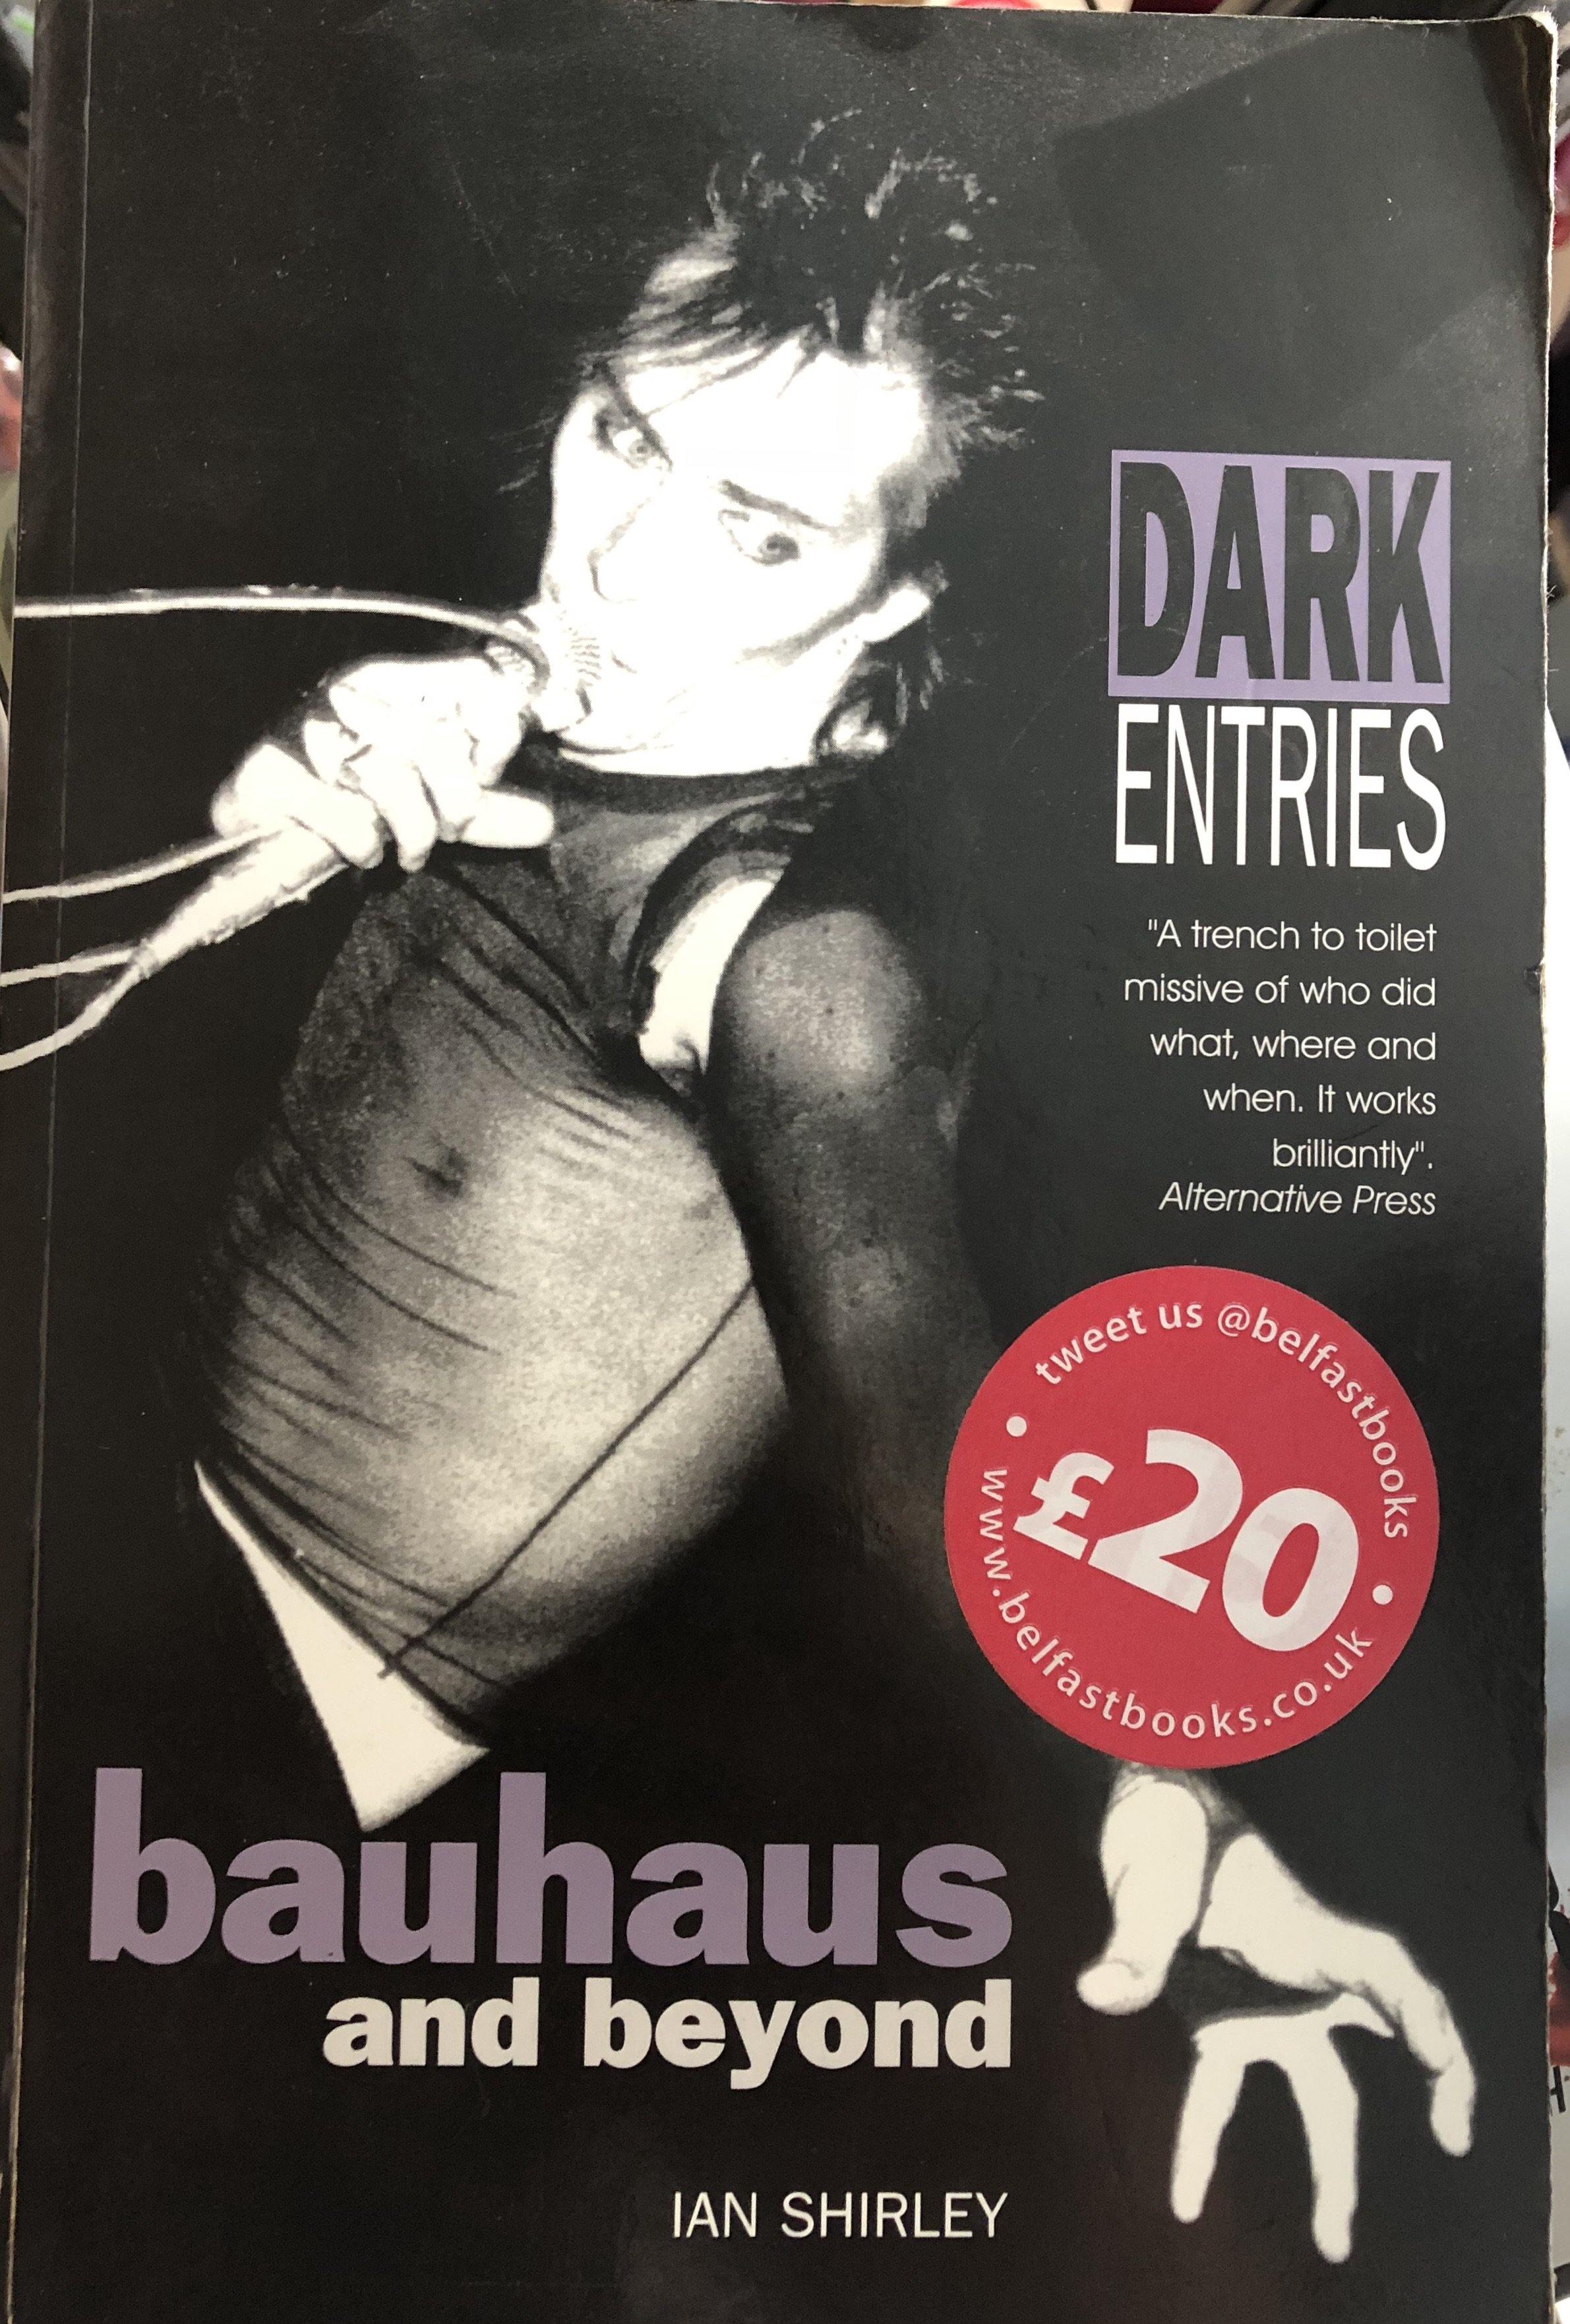 Dark Entries: Bauhaus and beyond (Music) - Belfast Books